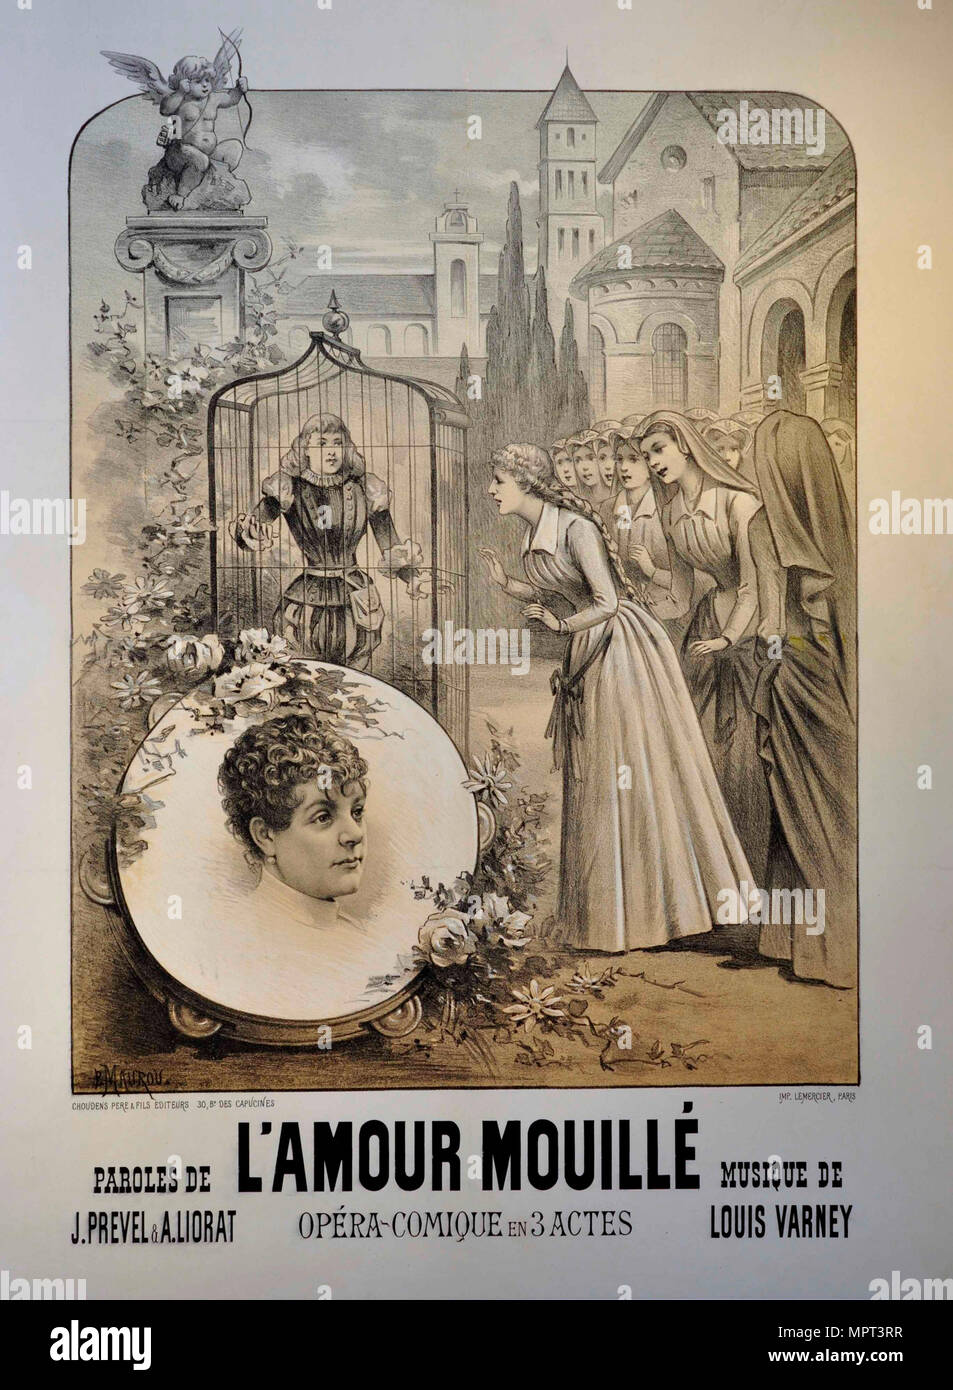 Plakat für die Operette L'amour mouillé von Louis Varney, 1887. Stockfoto